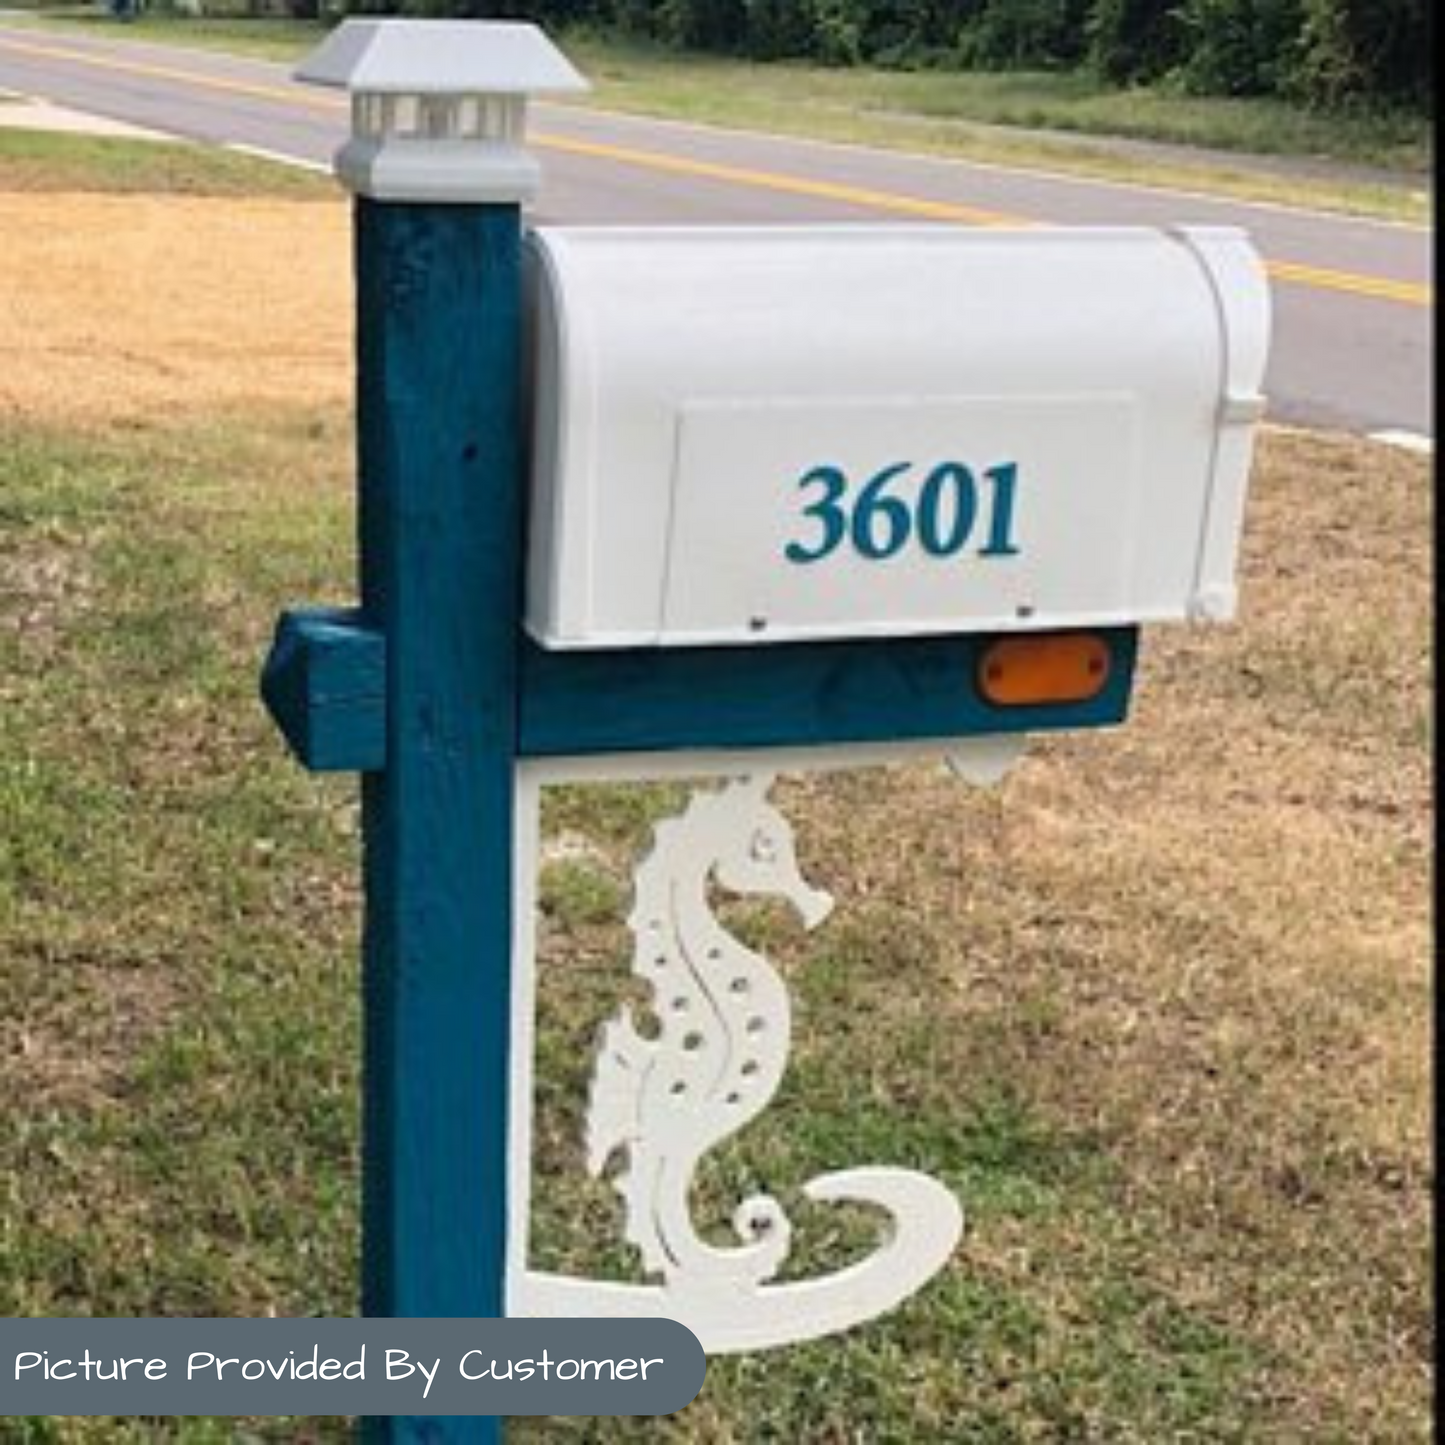 Mailbox Bracket - Seahorse Large 16x21 inch, Custom Mailbox, Coastal, Tropical, Bracket, Outdoor Decor, Mailbox & Post Not Included